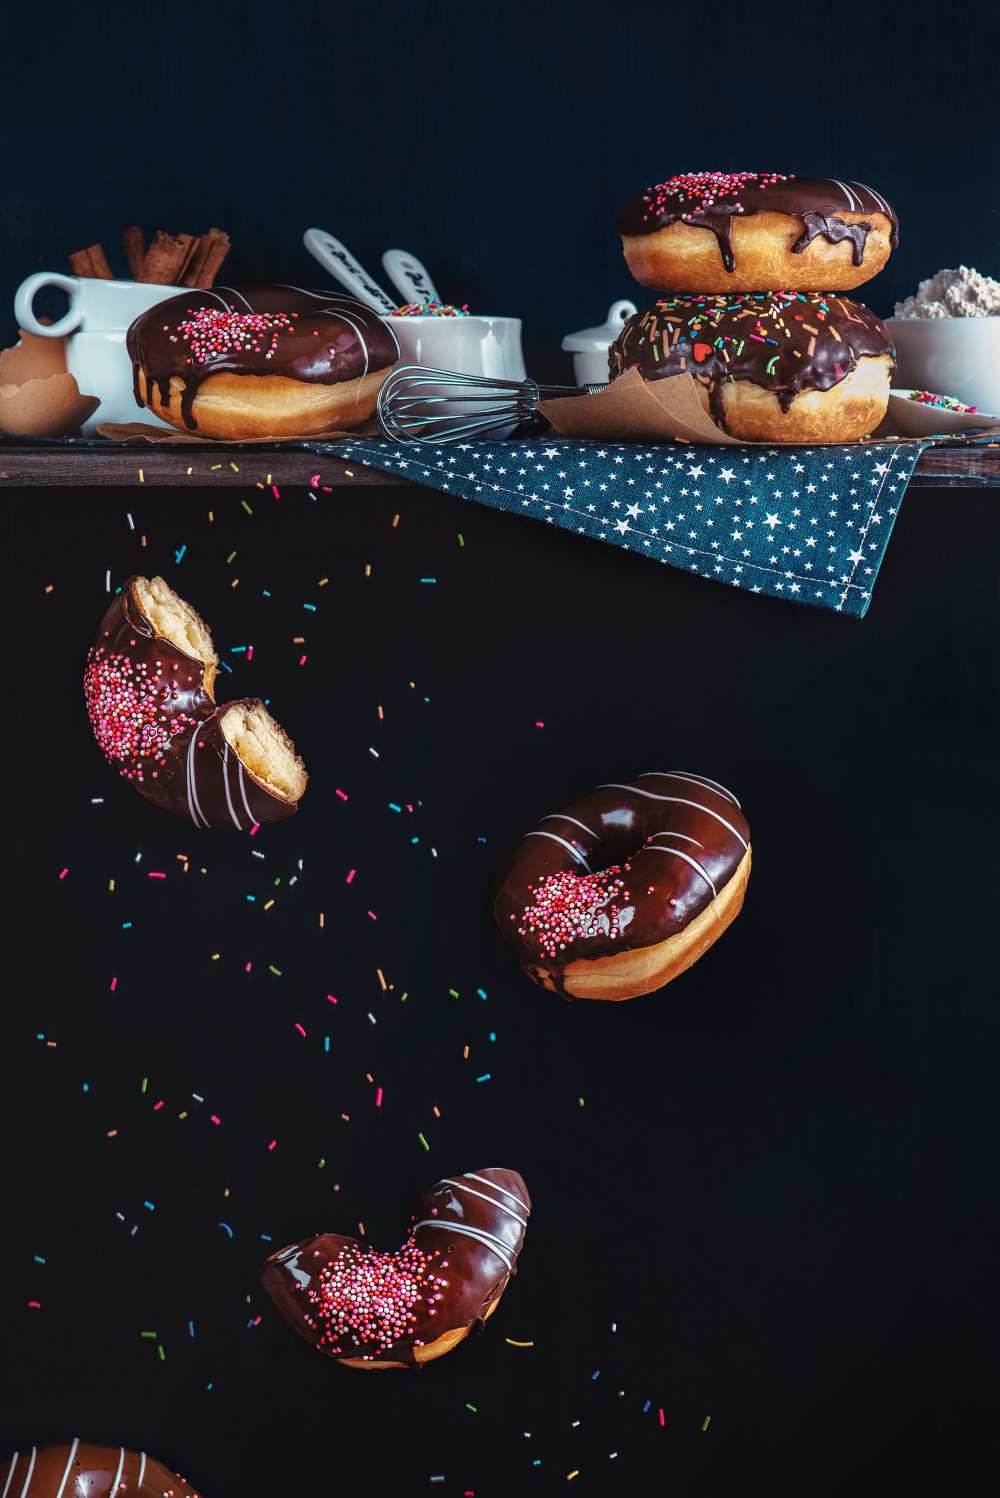 Donuts from the top shelf a Dina Belenko